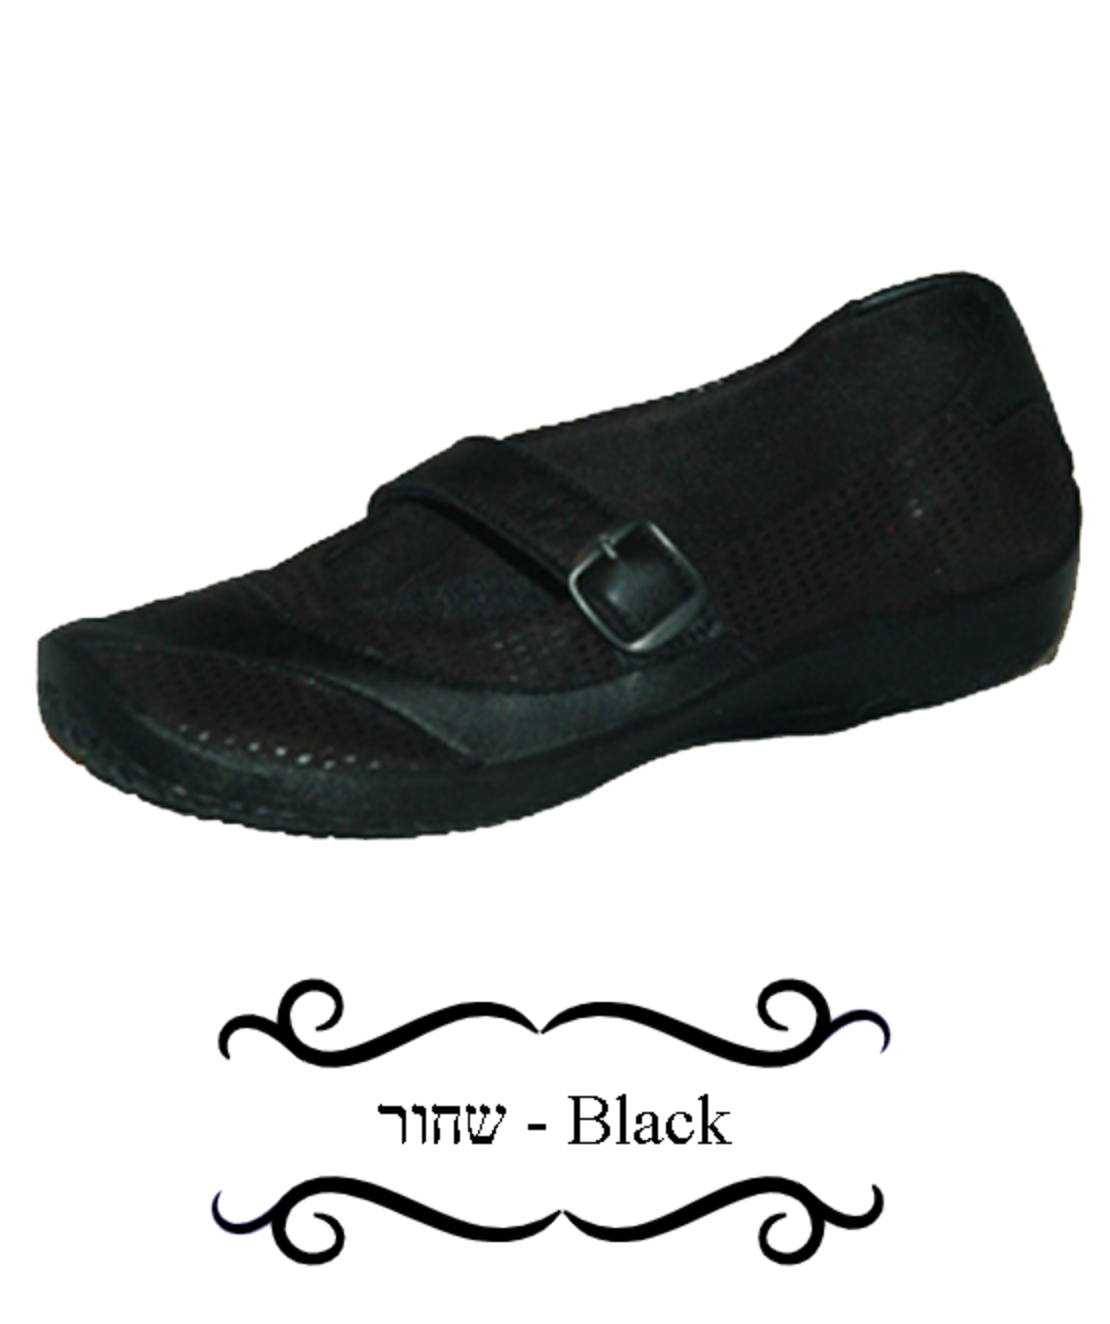 Arcopedico 4491 - Women's shoes